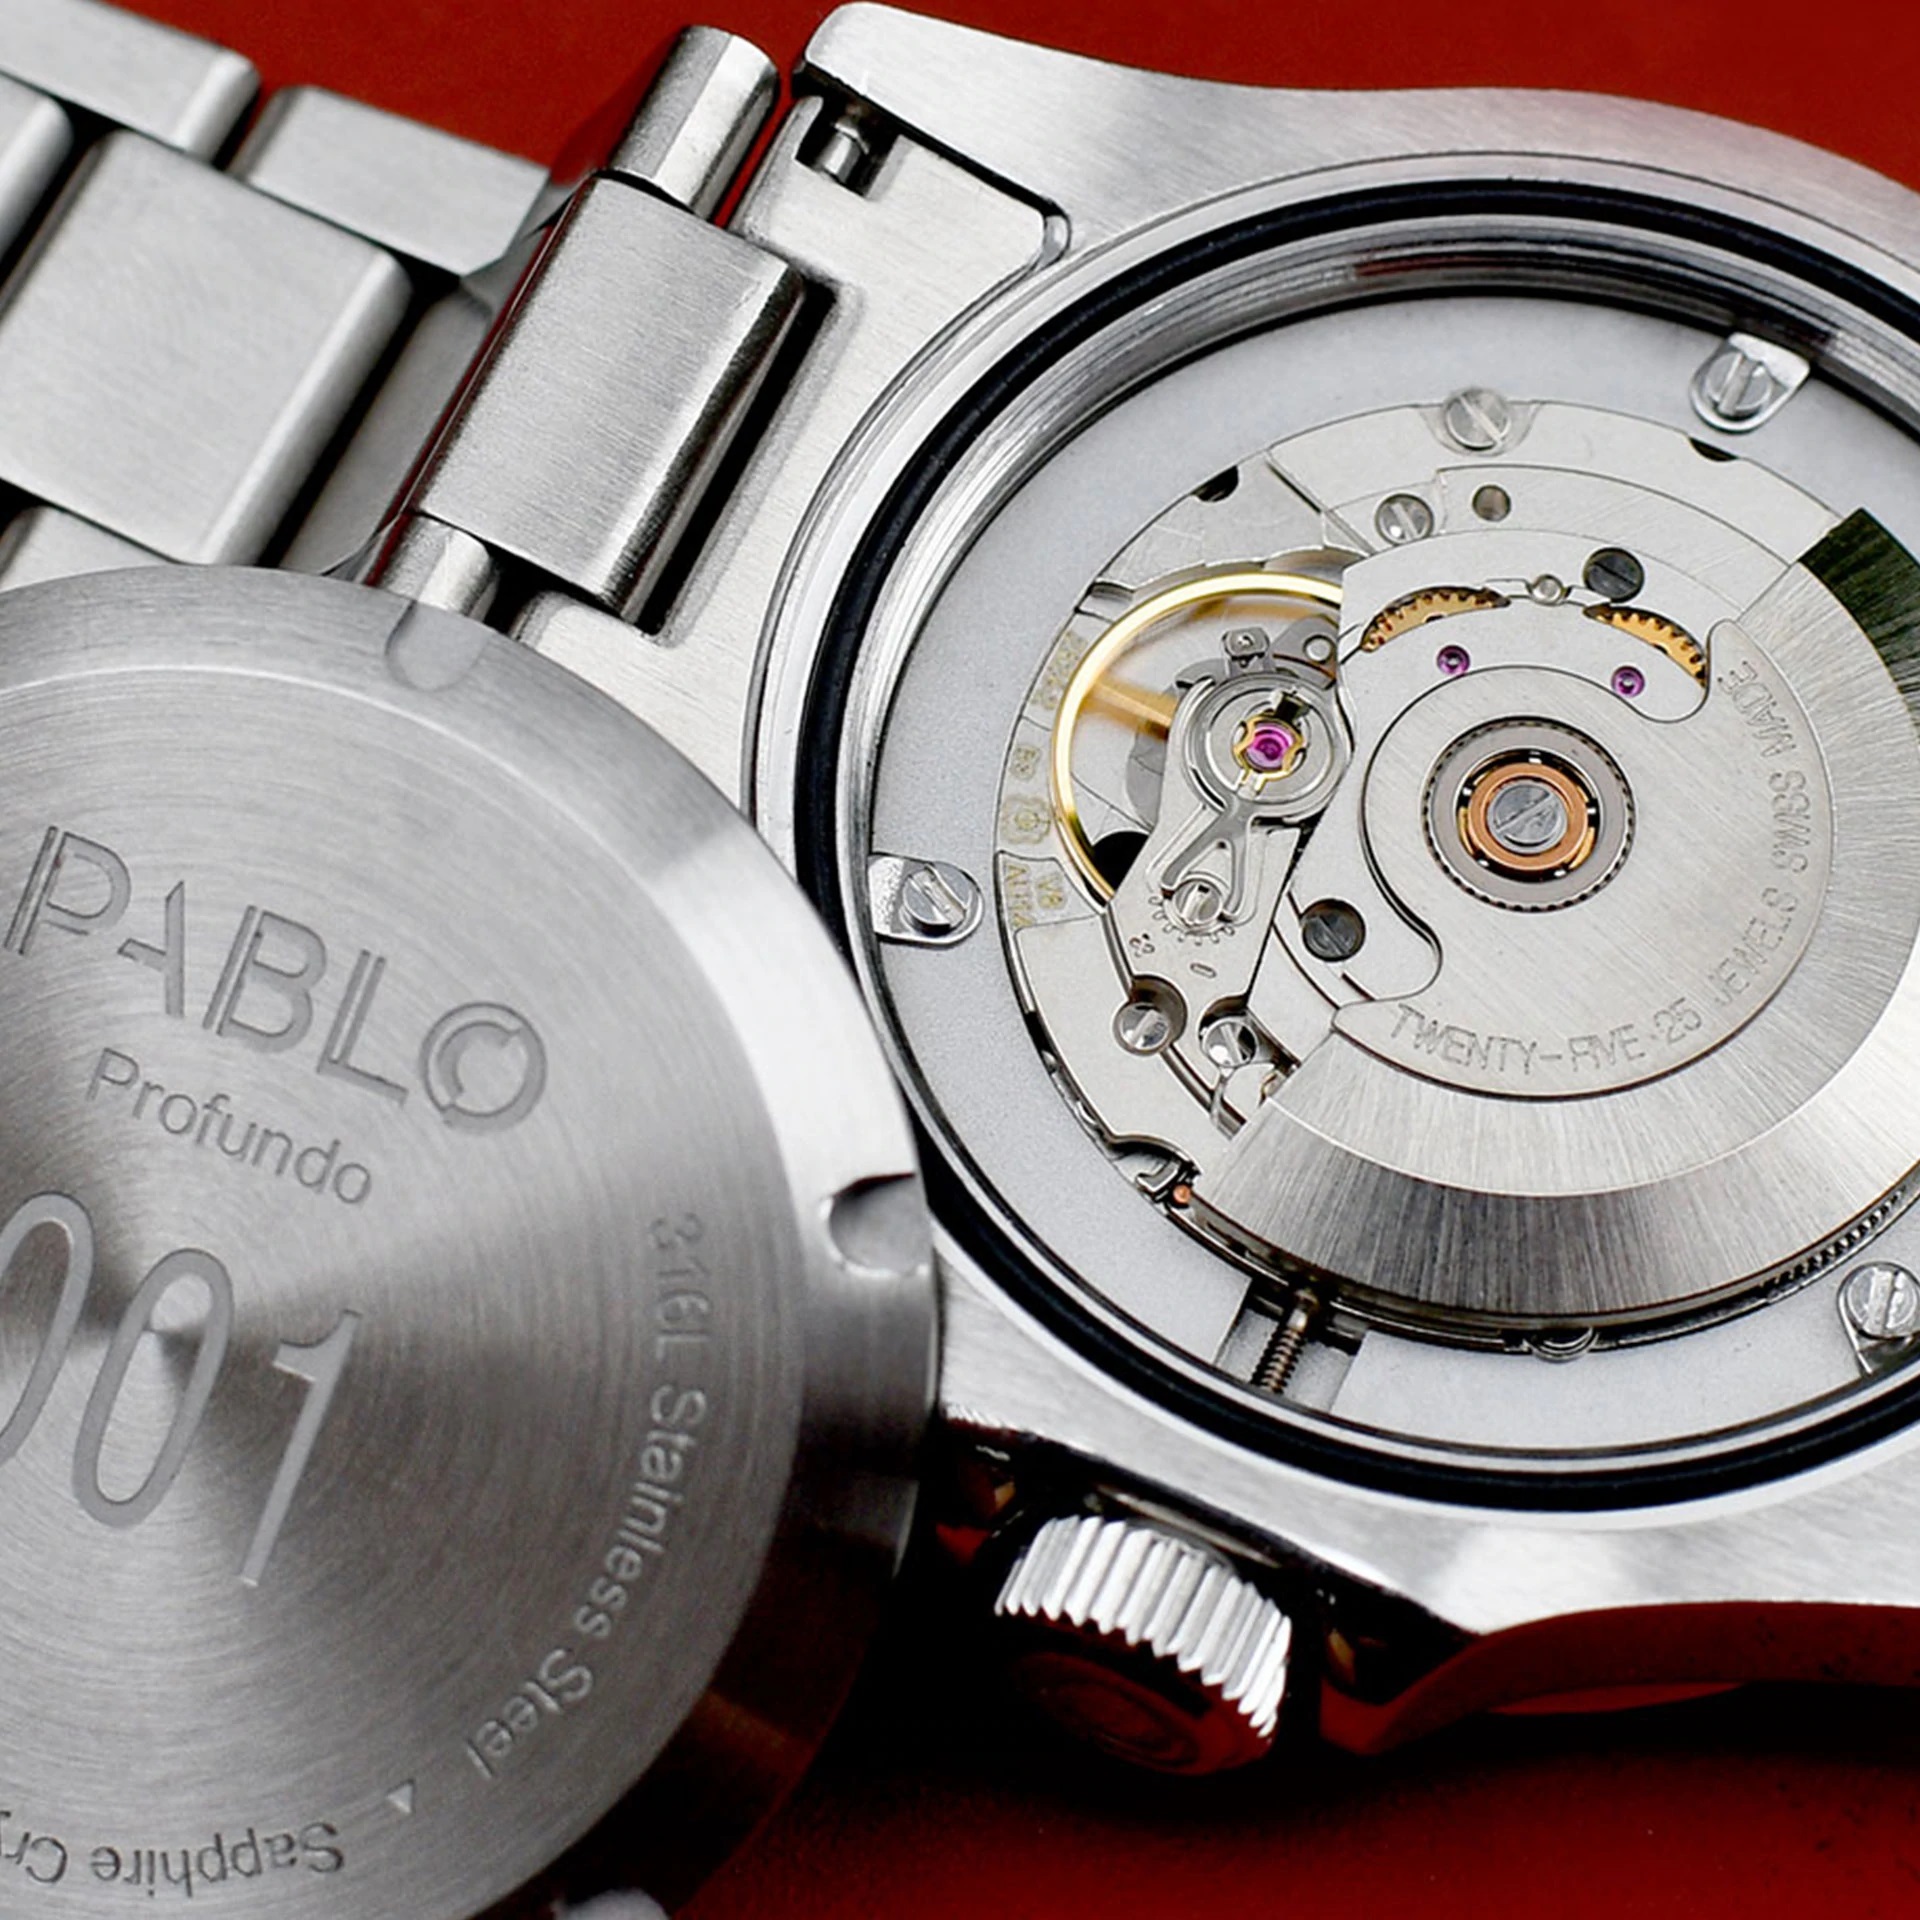 Pablo Profundo Automatic Men's Watch Black Dial / Black Bezel VB-11 Limited 200pcs - Click Image to Close